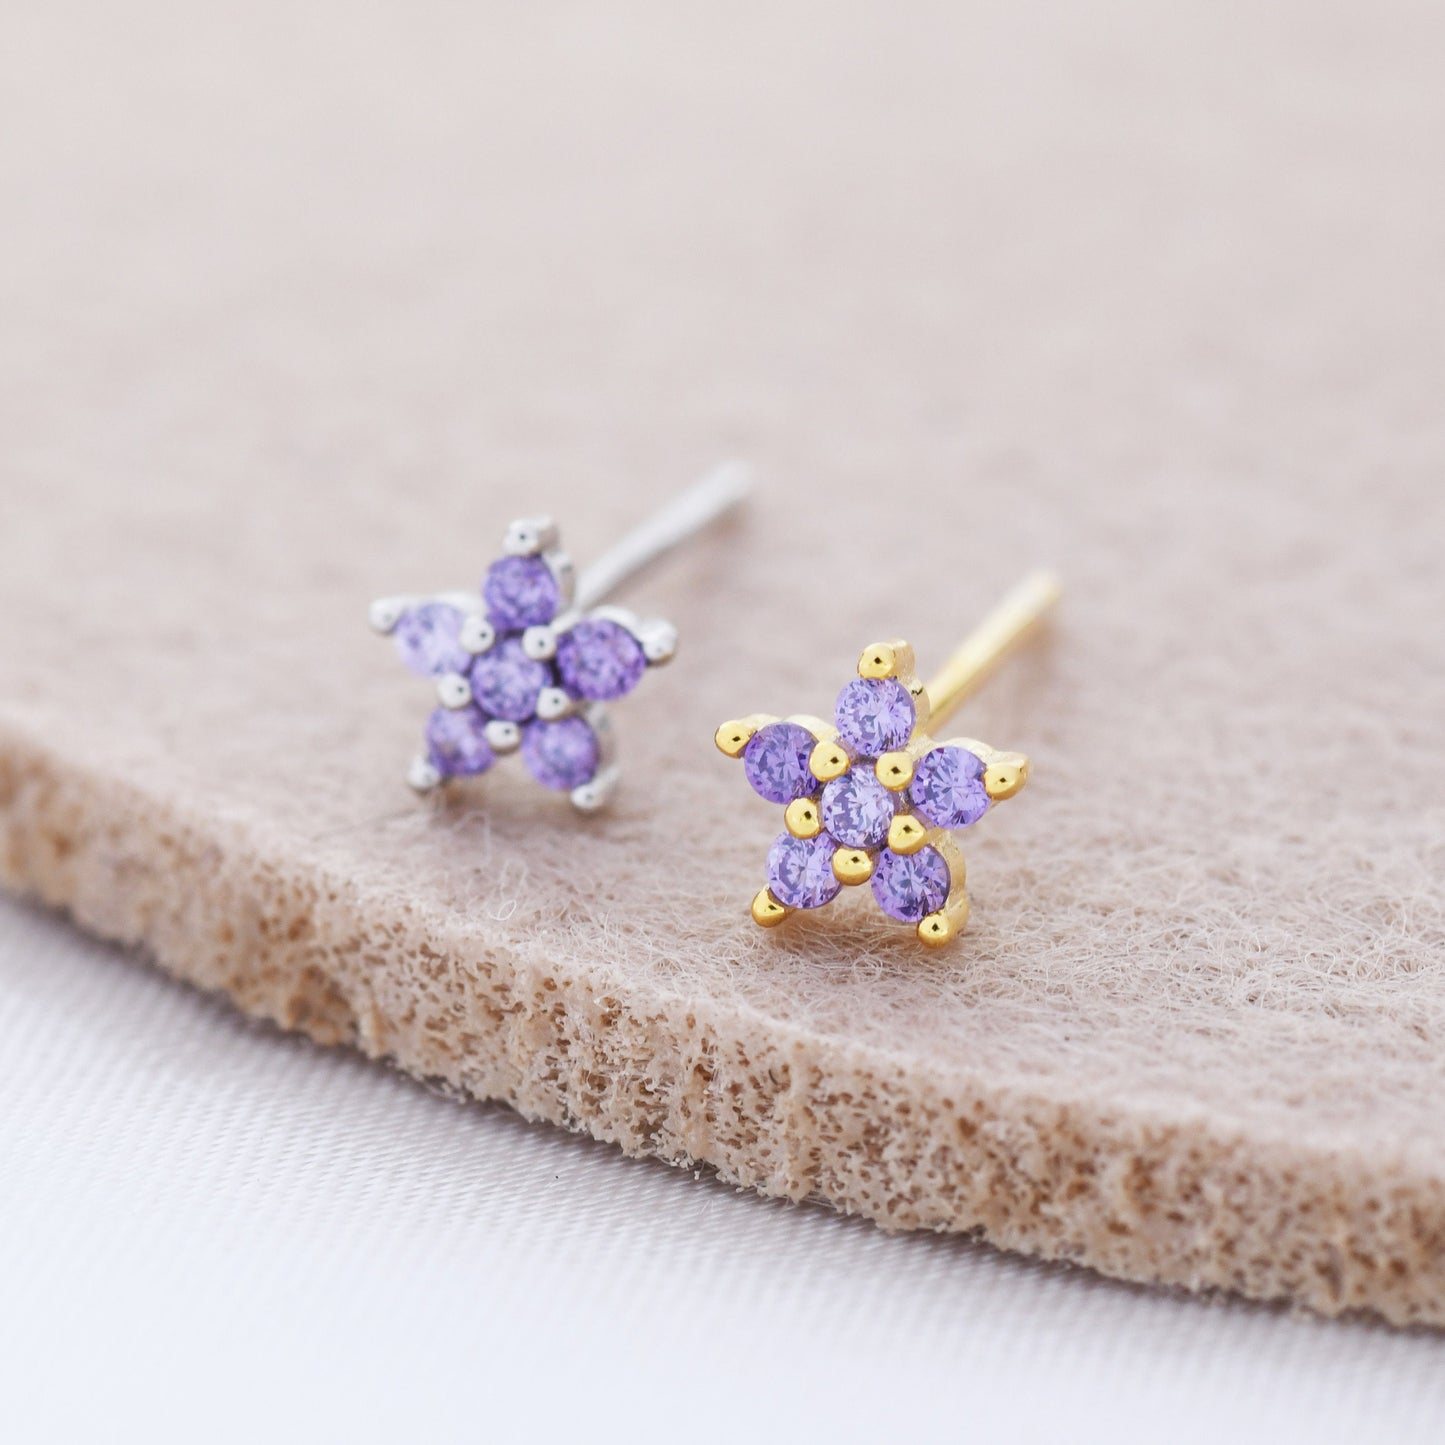 Tiny Lilac Purple CZ Flower Stud Earrings in Sterling Silver, Silver or Gold, Amethyst Crystal Flower Earrings, Stacking Earrings